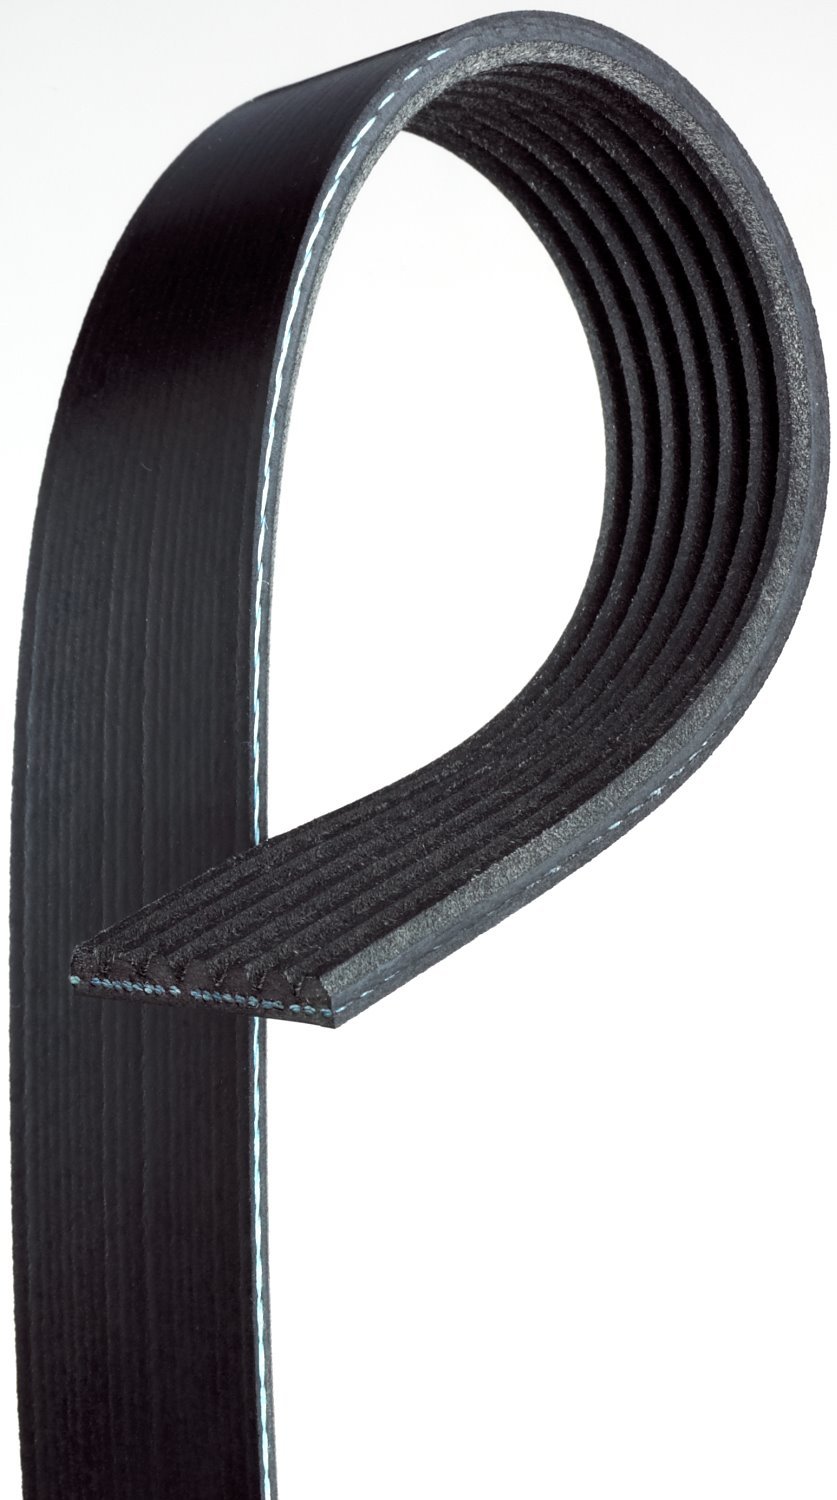 Micro v belts